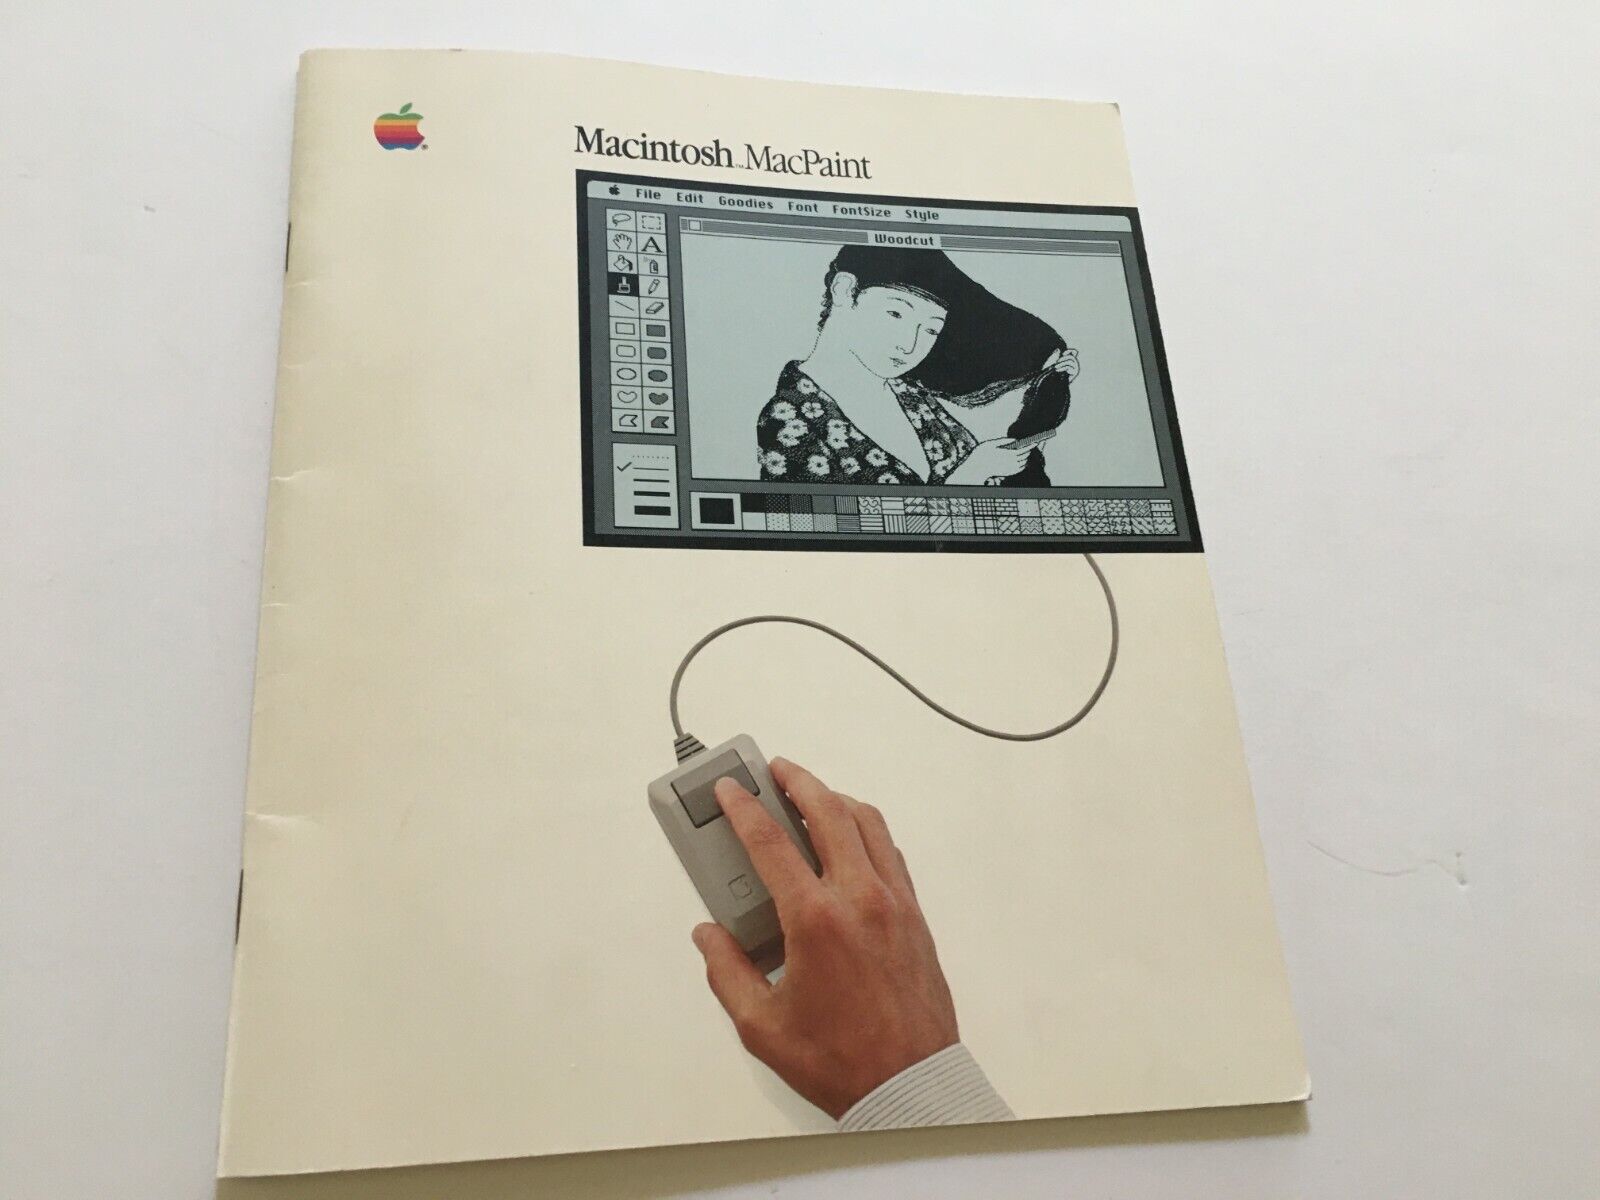 Vintage 1983 Apple Macintosh MacPaint Manual